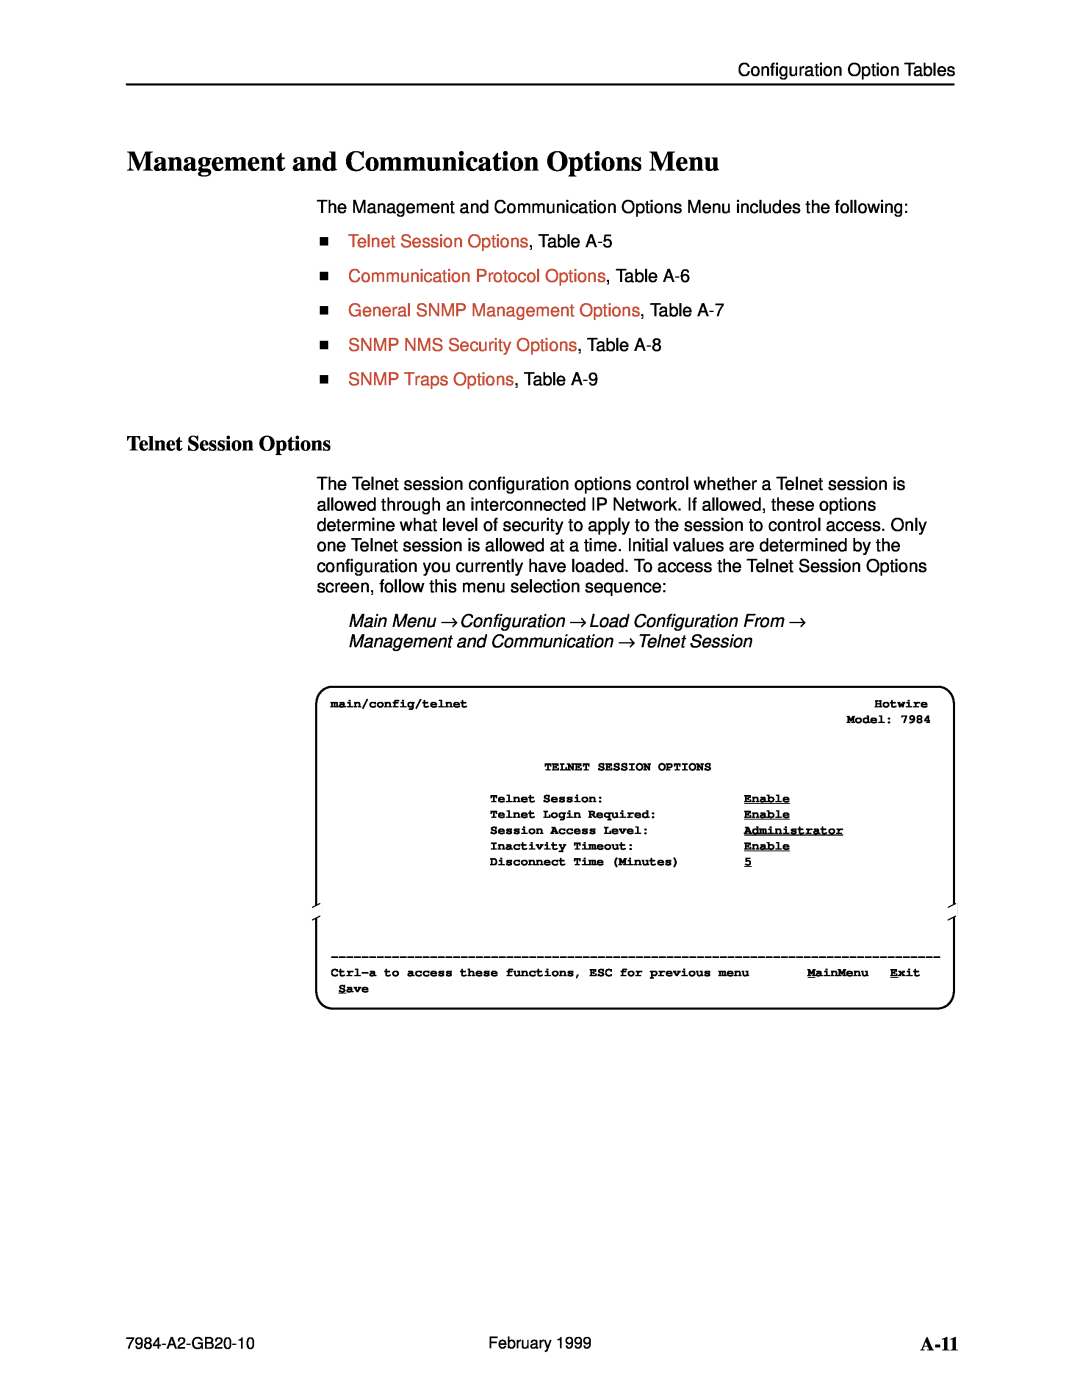 Paradyne Hotwire 7984 manual Management and Communication Options Menu, Telnet Session Options, A-11 